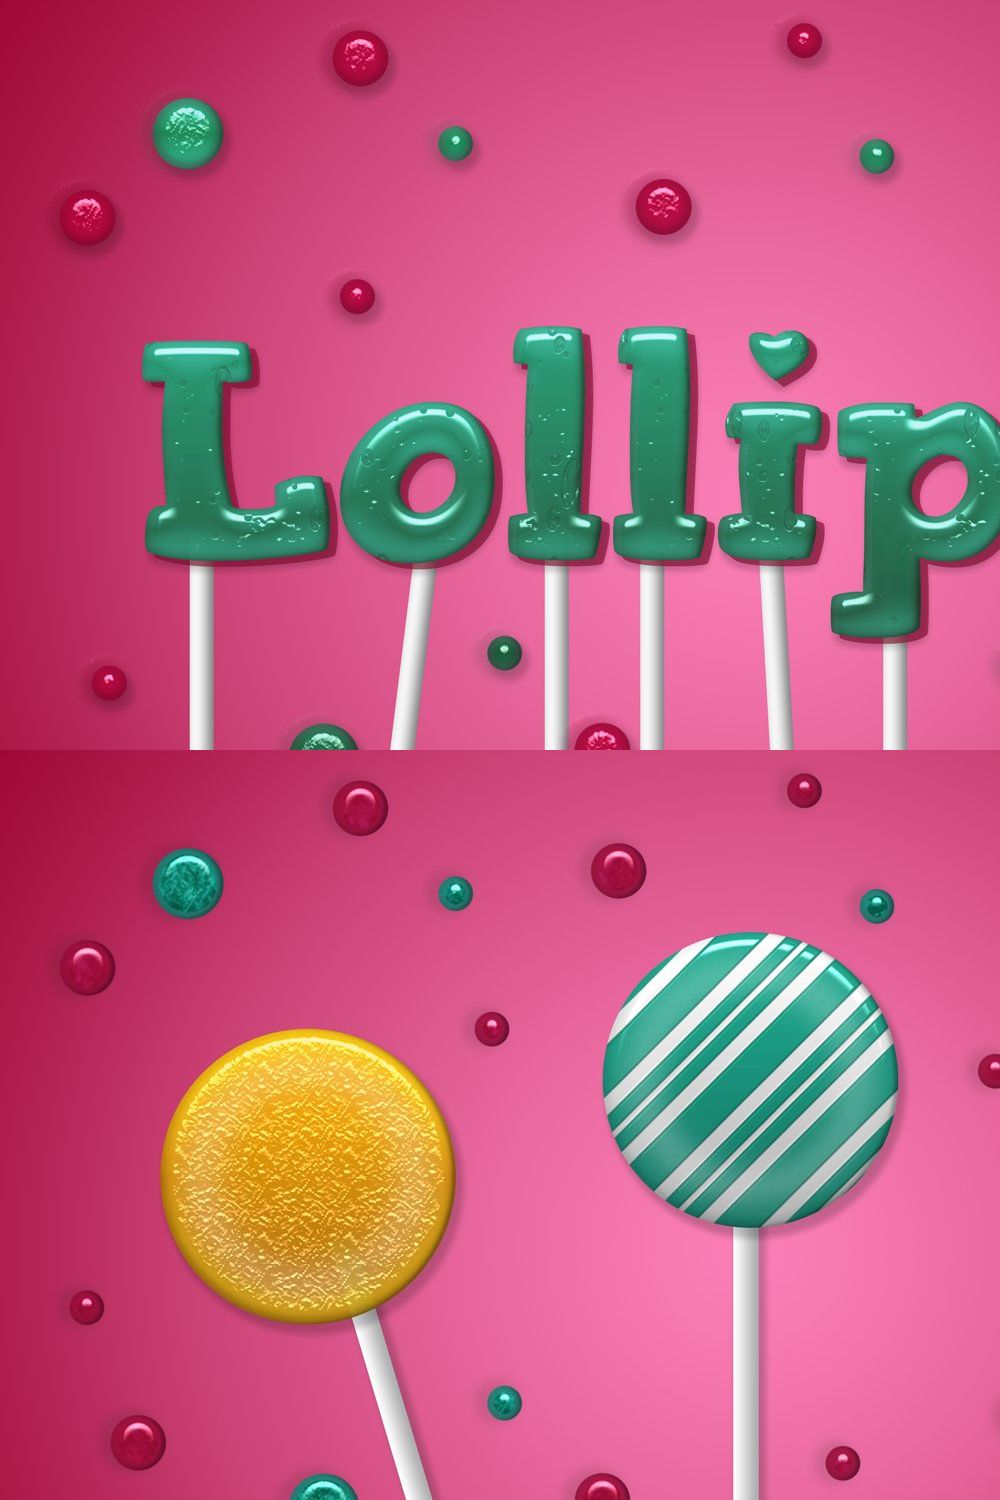 Lollipop | Photoshop Layer Styles pinterest preview image.